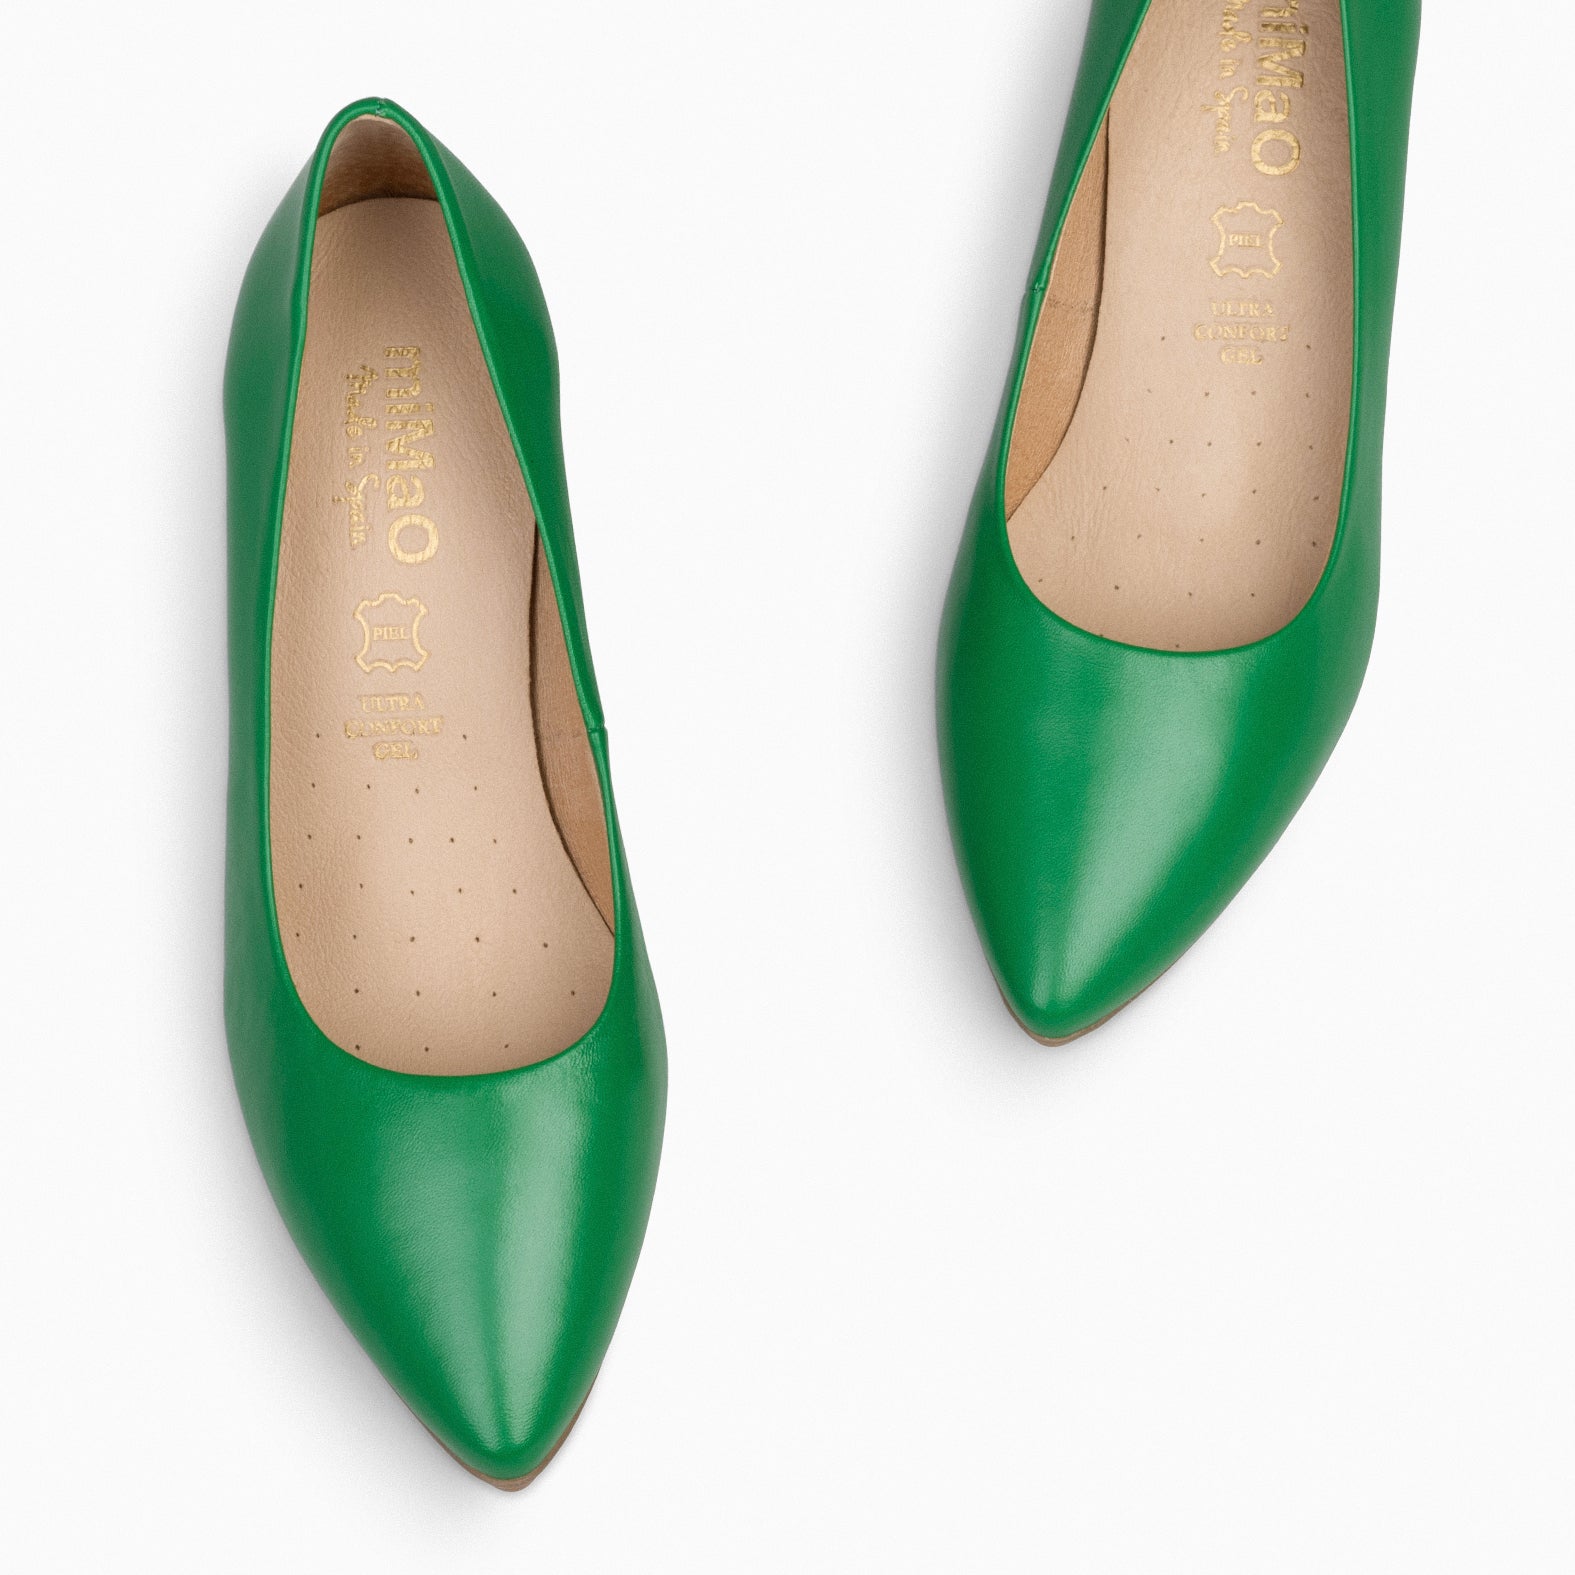 URBAN S SALON – GREEN nappa leather mid heel